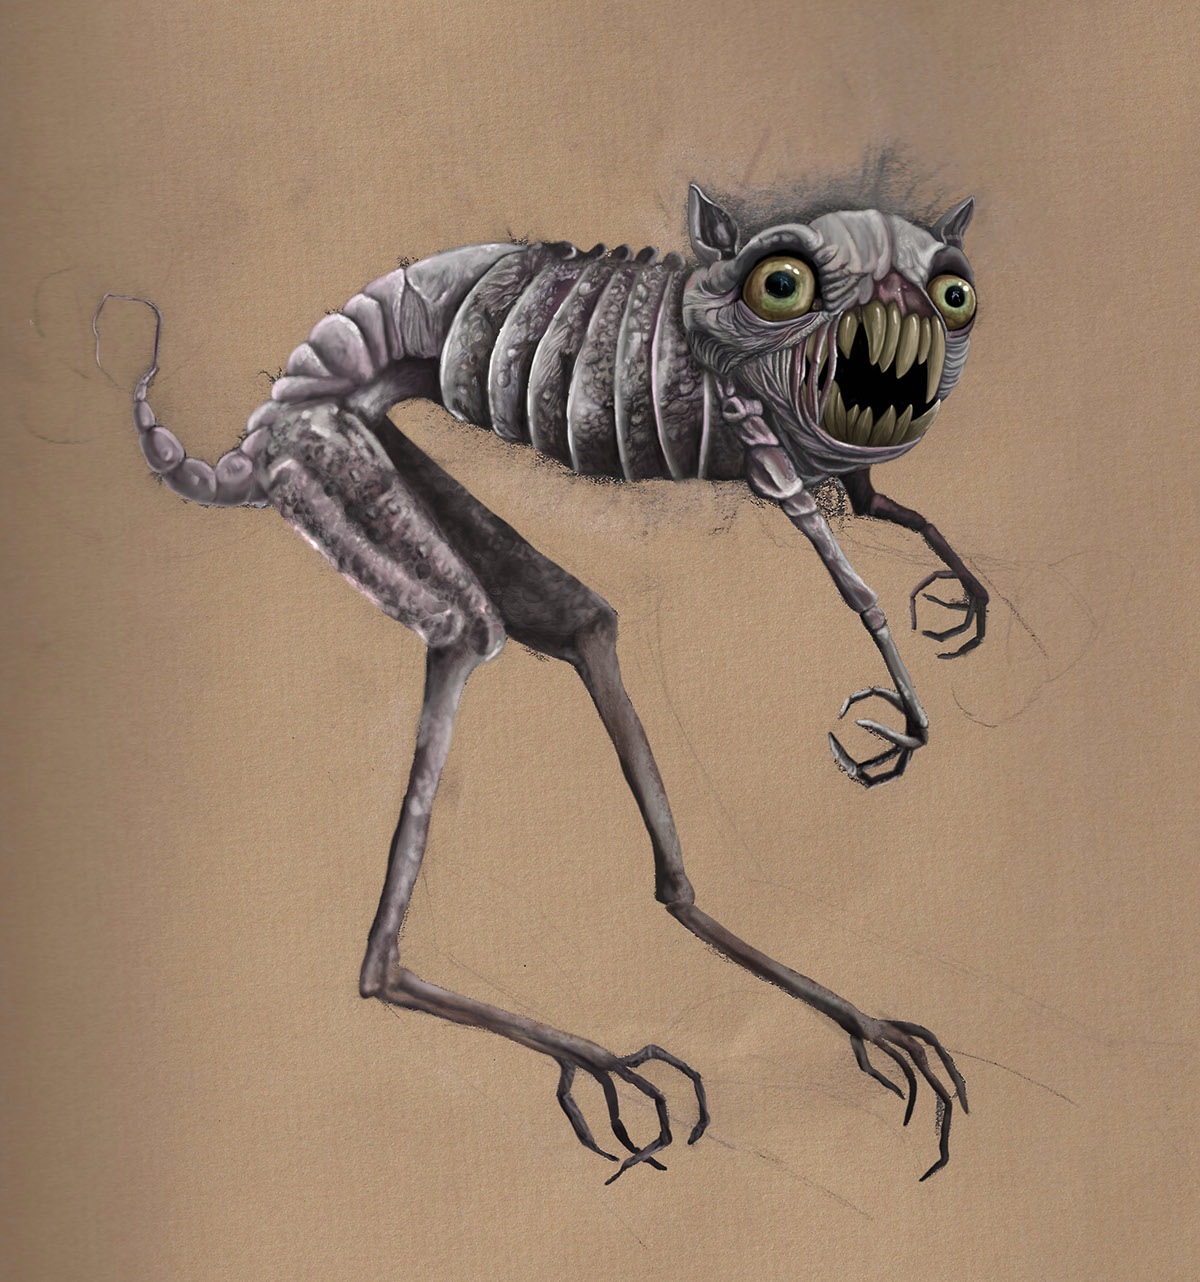 creepy eerie monsters creatures Scary frightening horrifying terrifying animals cute sweet cuddly morbid dark disturbing